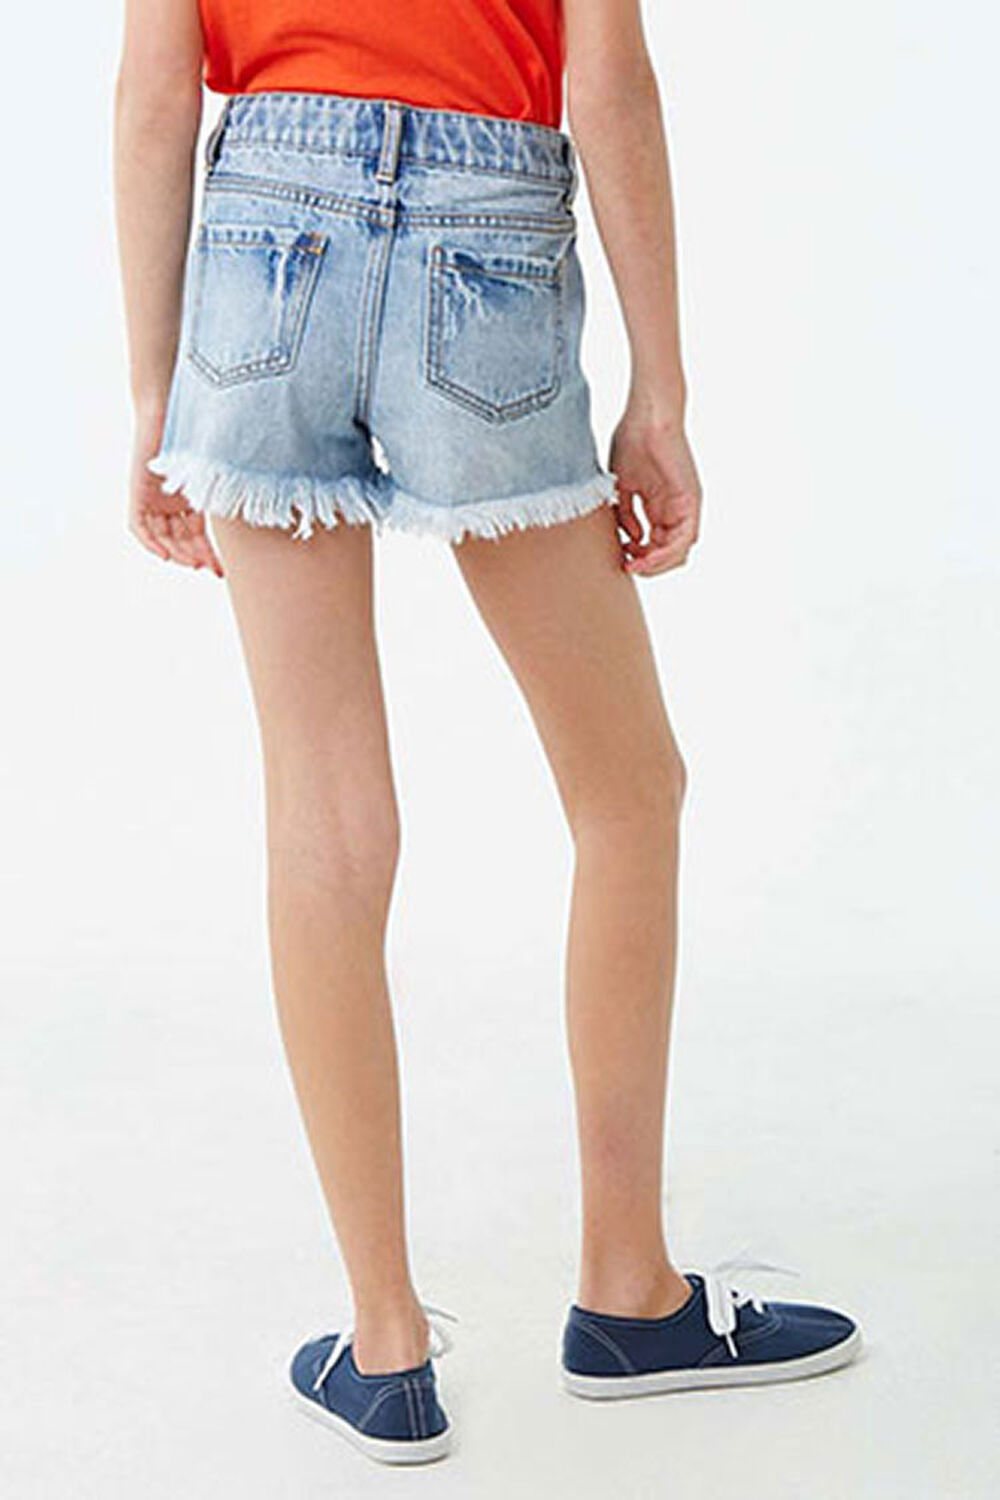 MEDIUM DENIM Girls Distressed Denim Shorts (Kids), image 3